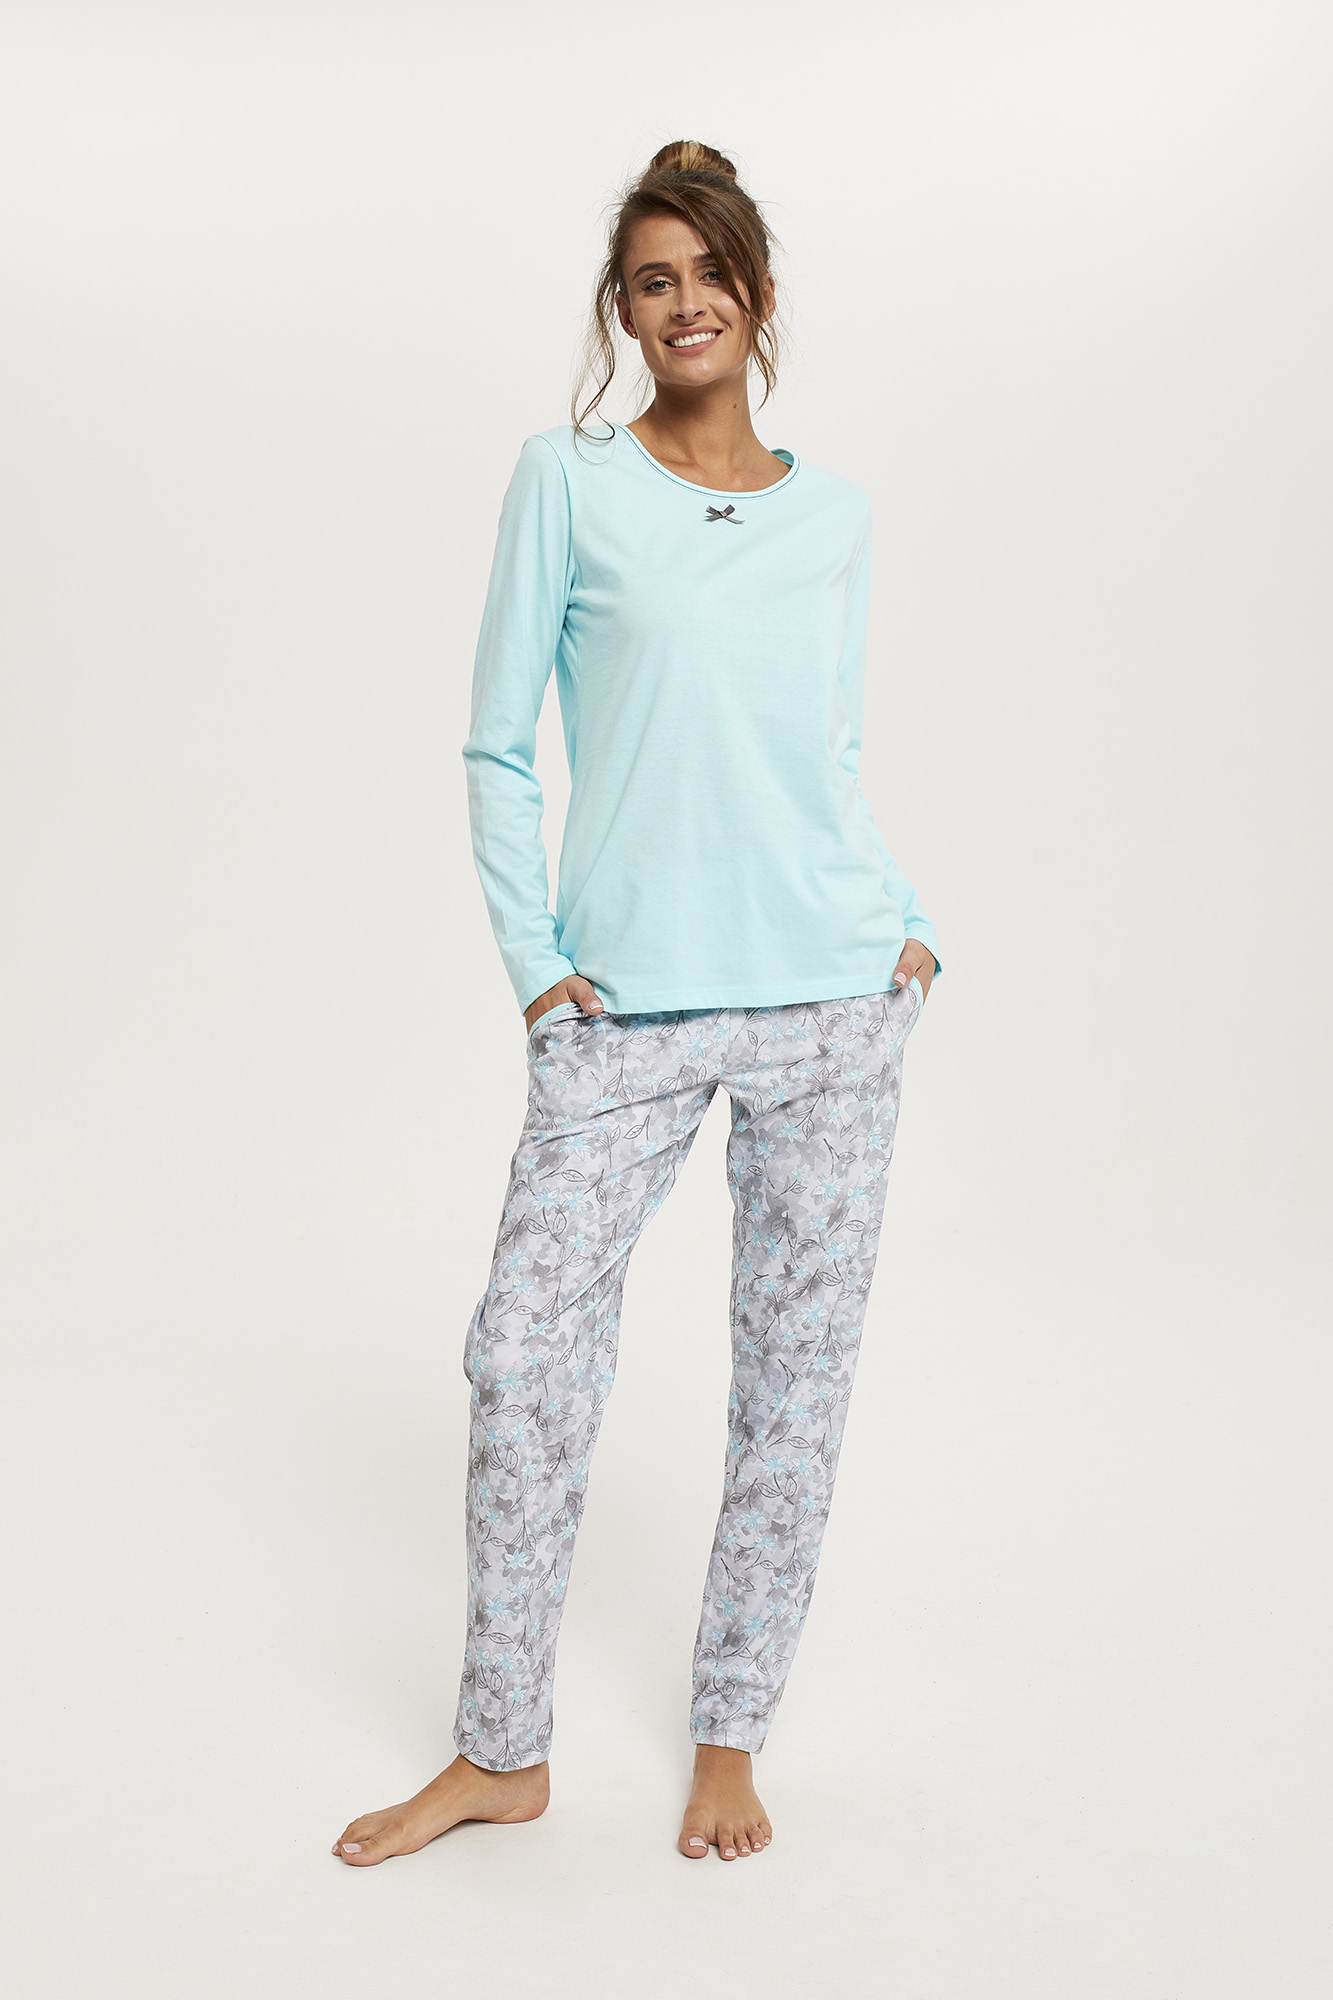 Women's Pyjamas Ganika Long Sleeves, Long Legs - Turquoise/print